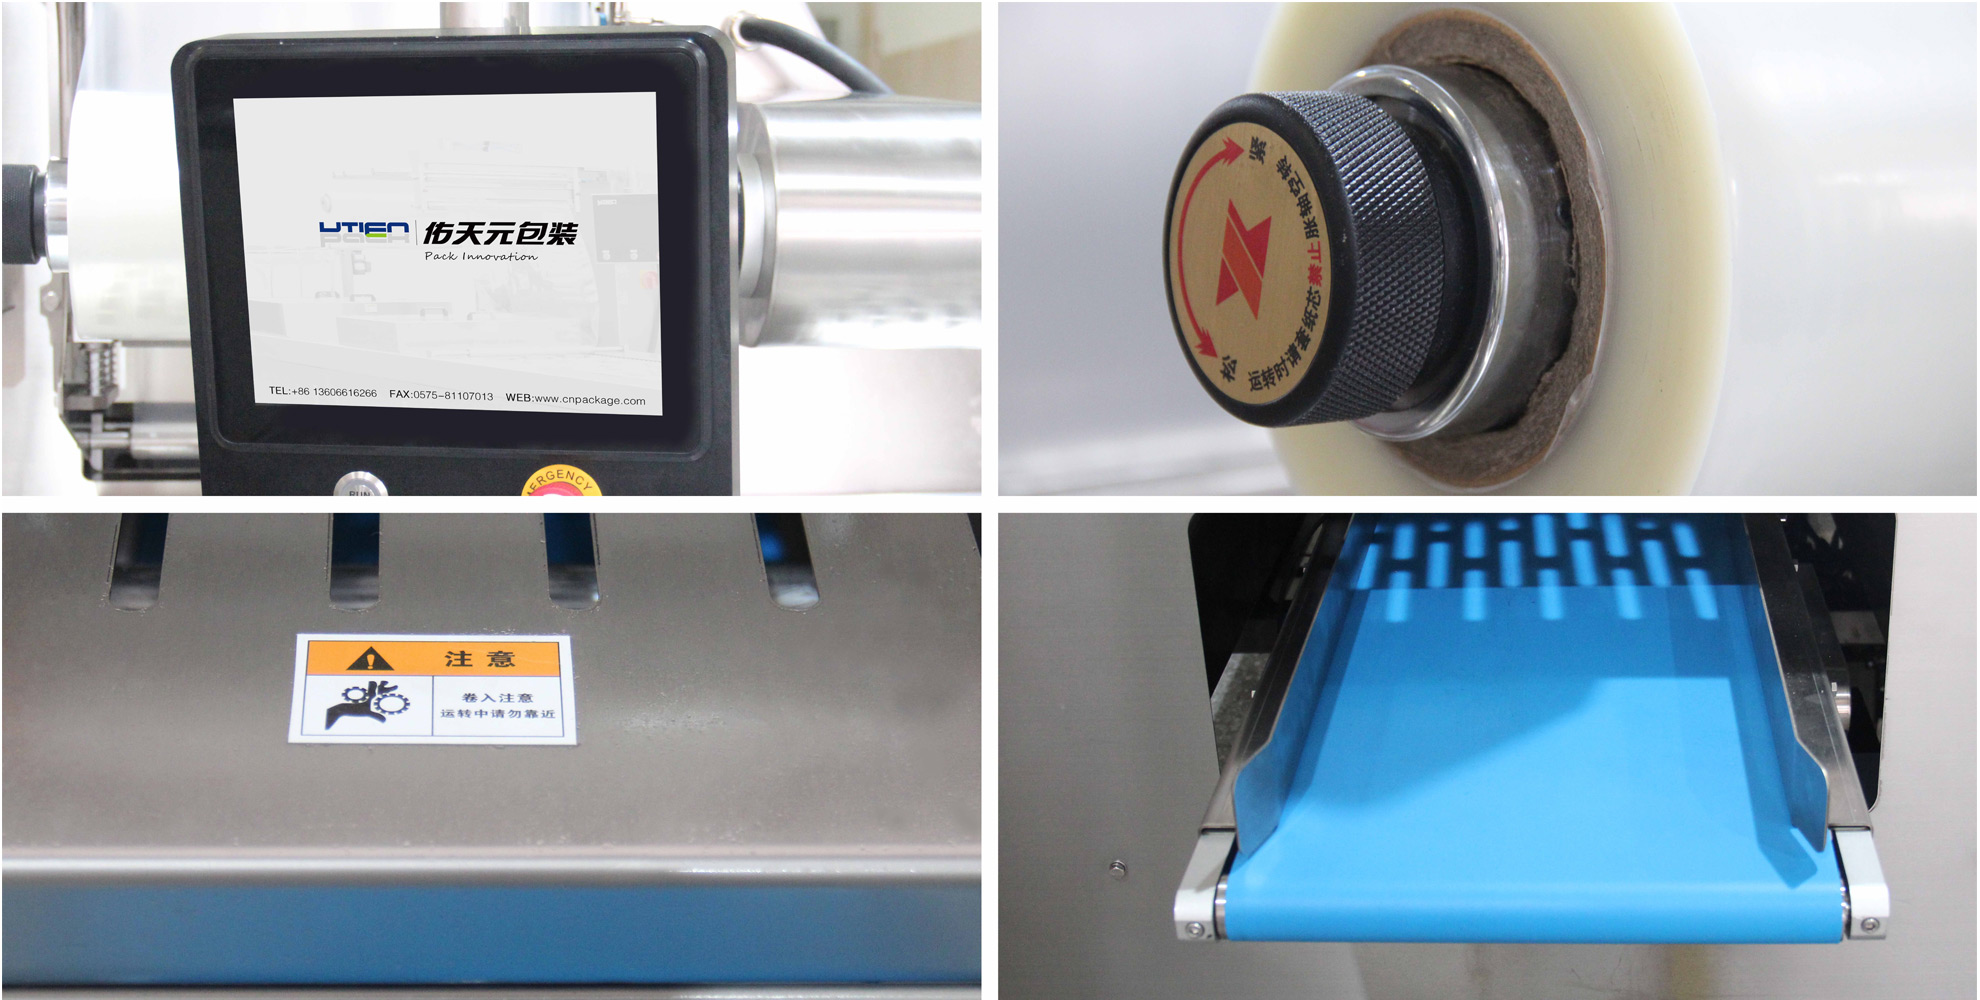 Food tray sealing machine | vacuum skin packaging at home | tray sealing machine for sale - Utien